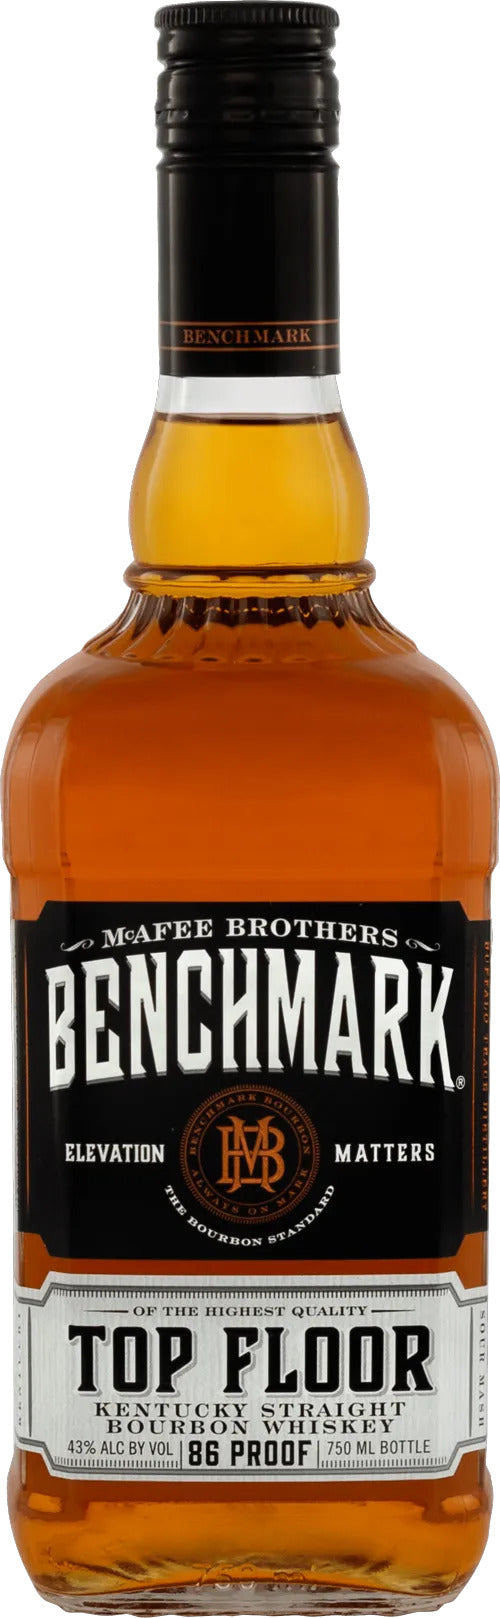 Benchmark Elevation Matters Top Floor Bourbon Whiskey